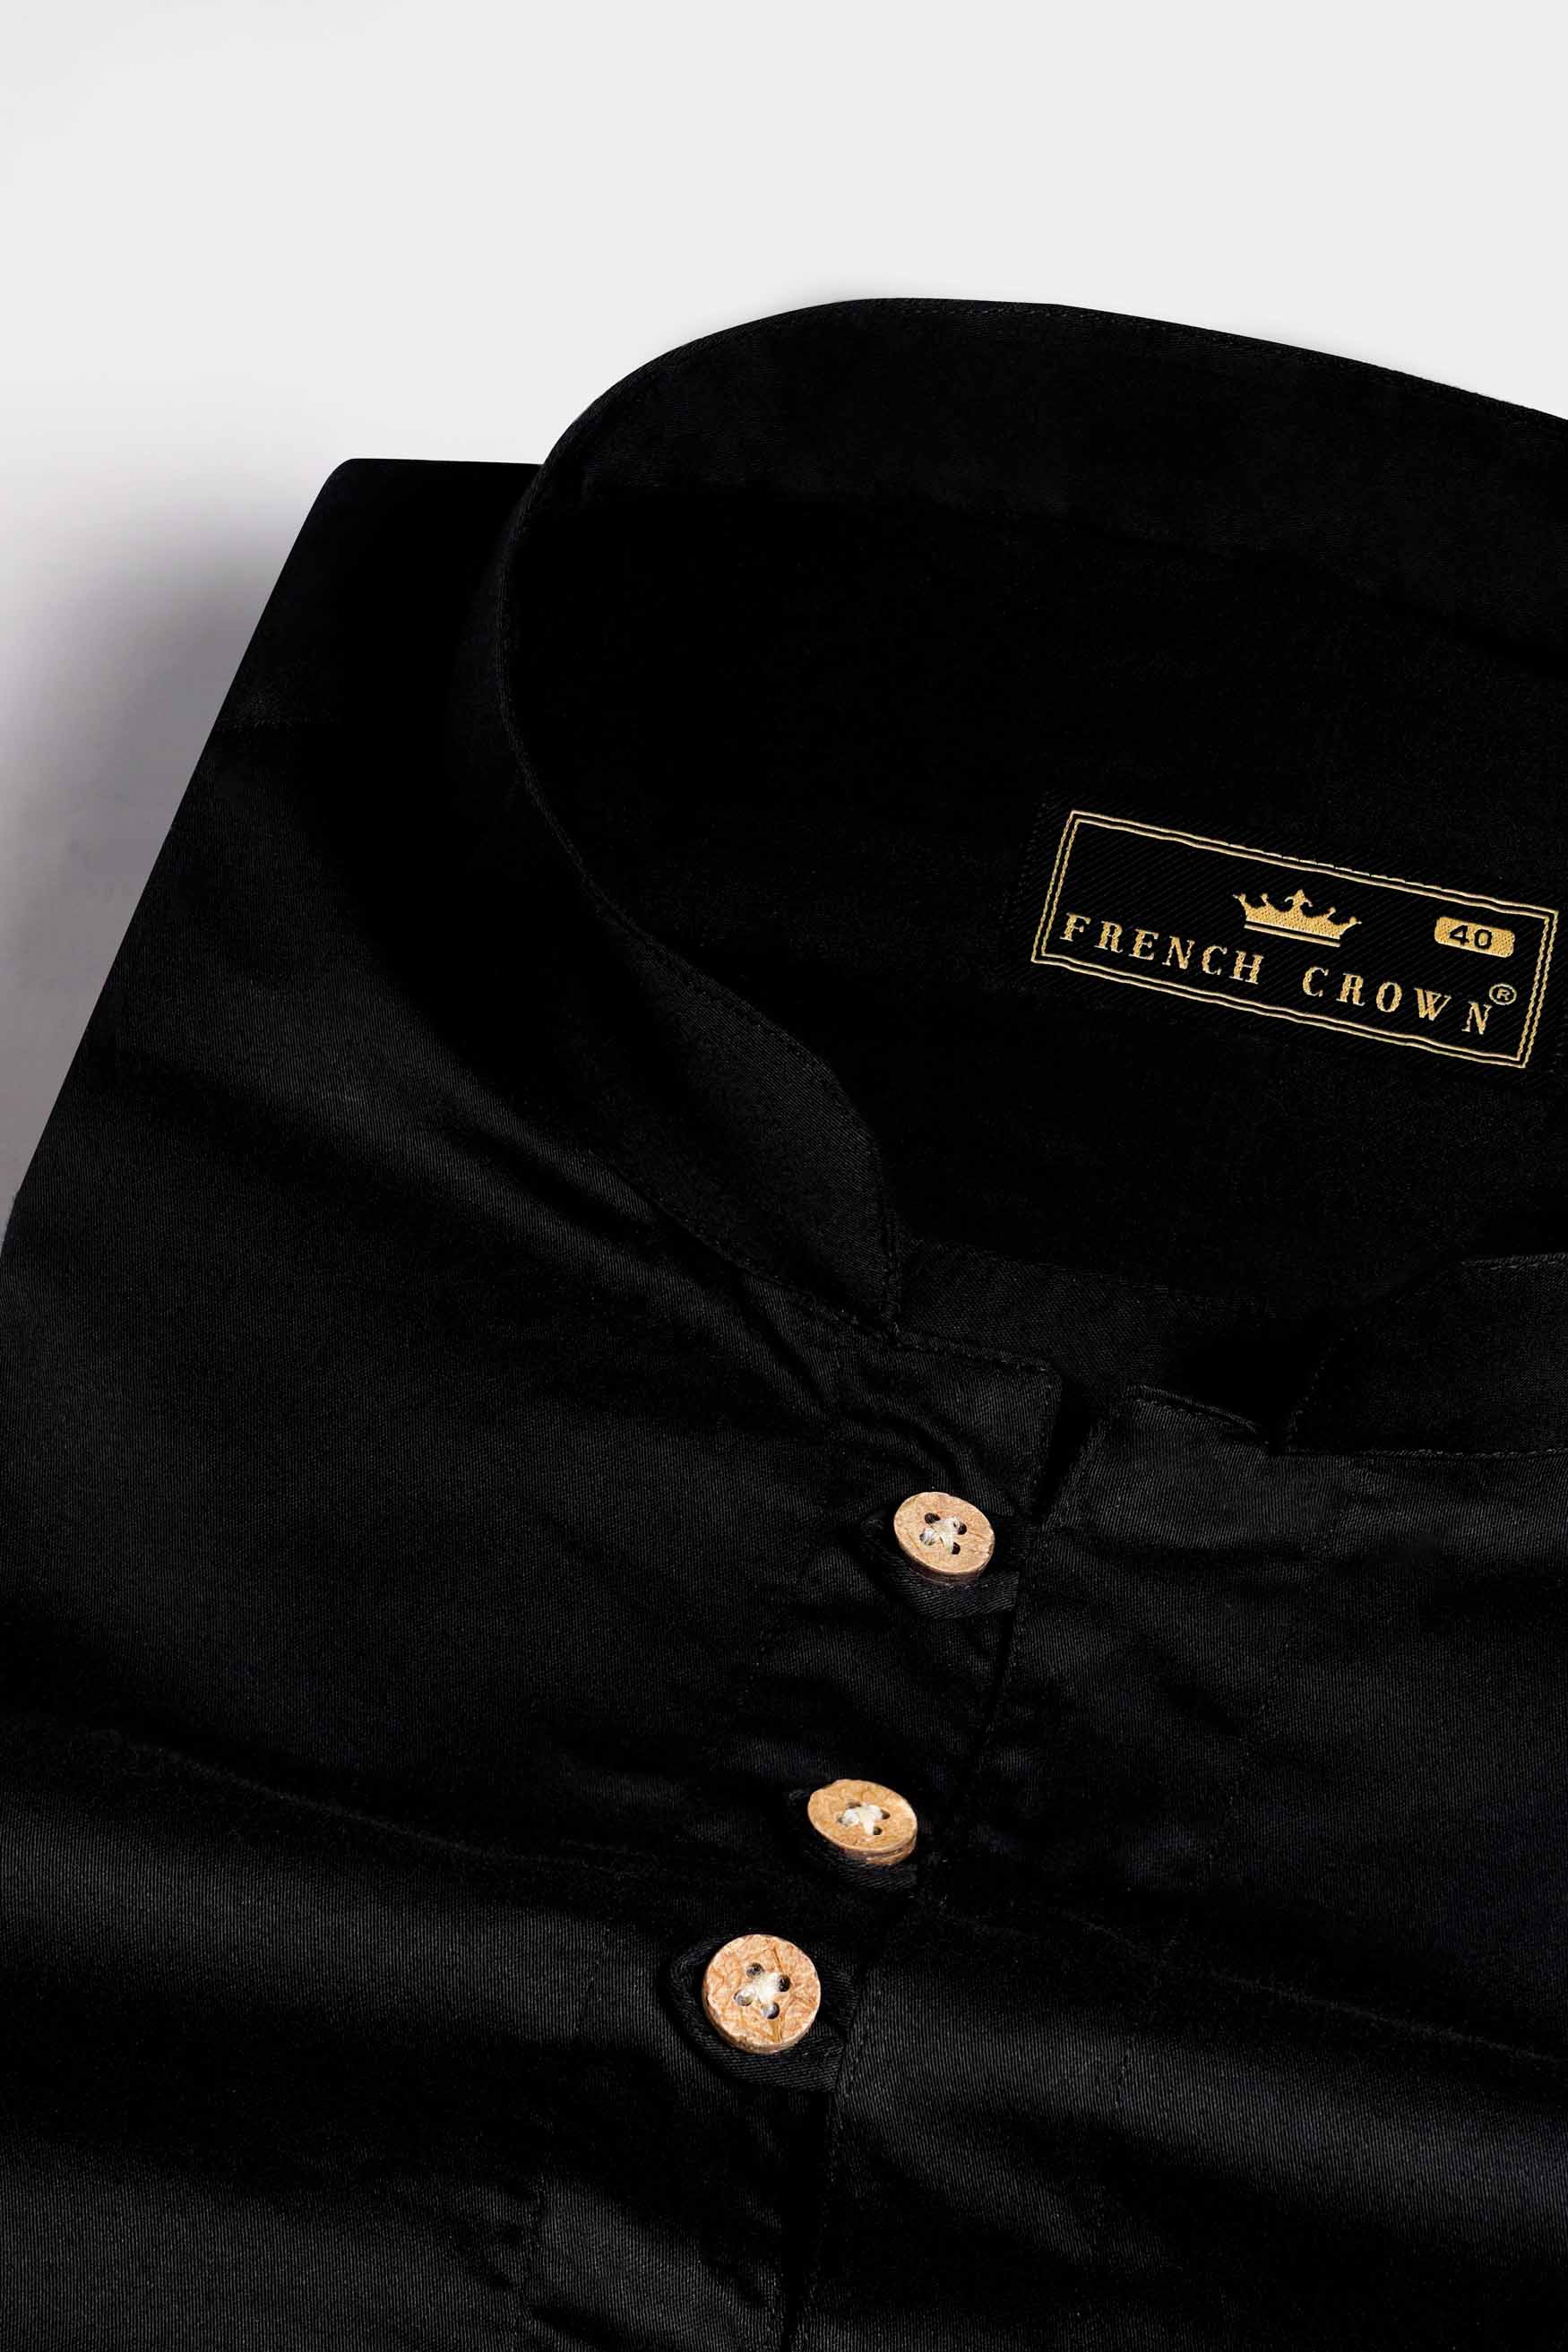 Jade Black Gayatri Mantra Embroidered Subtle Sheen Super Soft Premium Cotton Designer Kurta Shirt